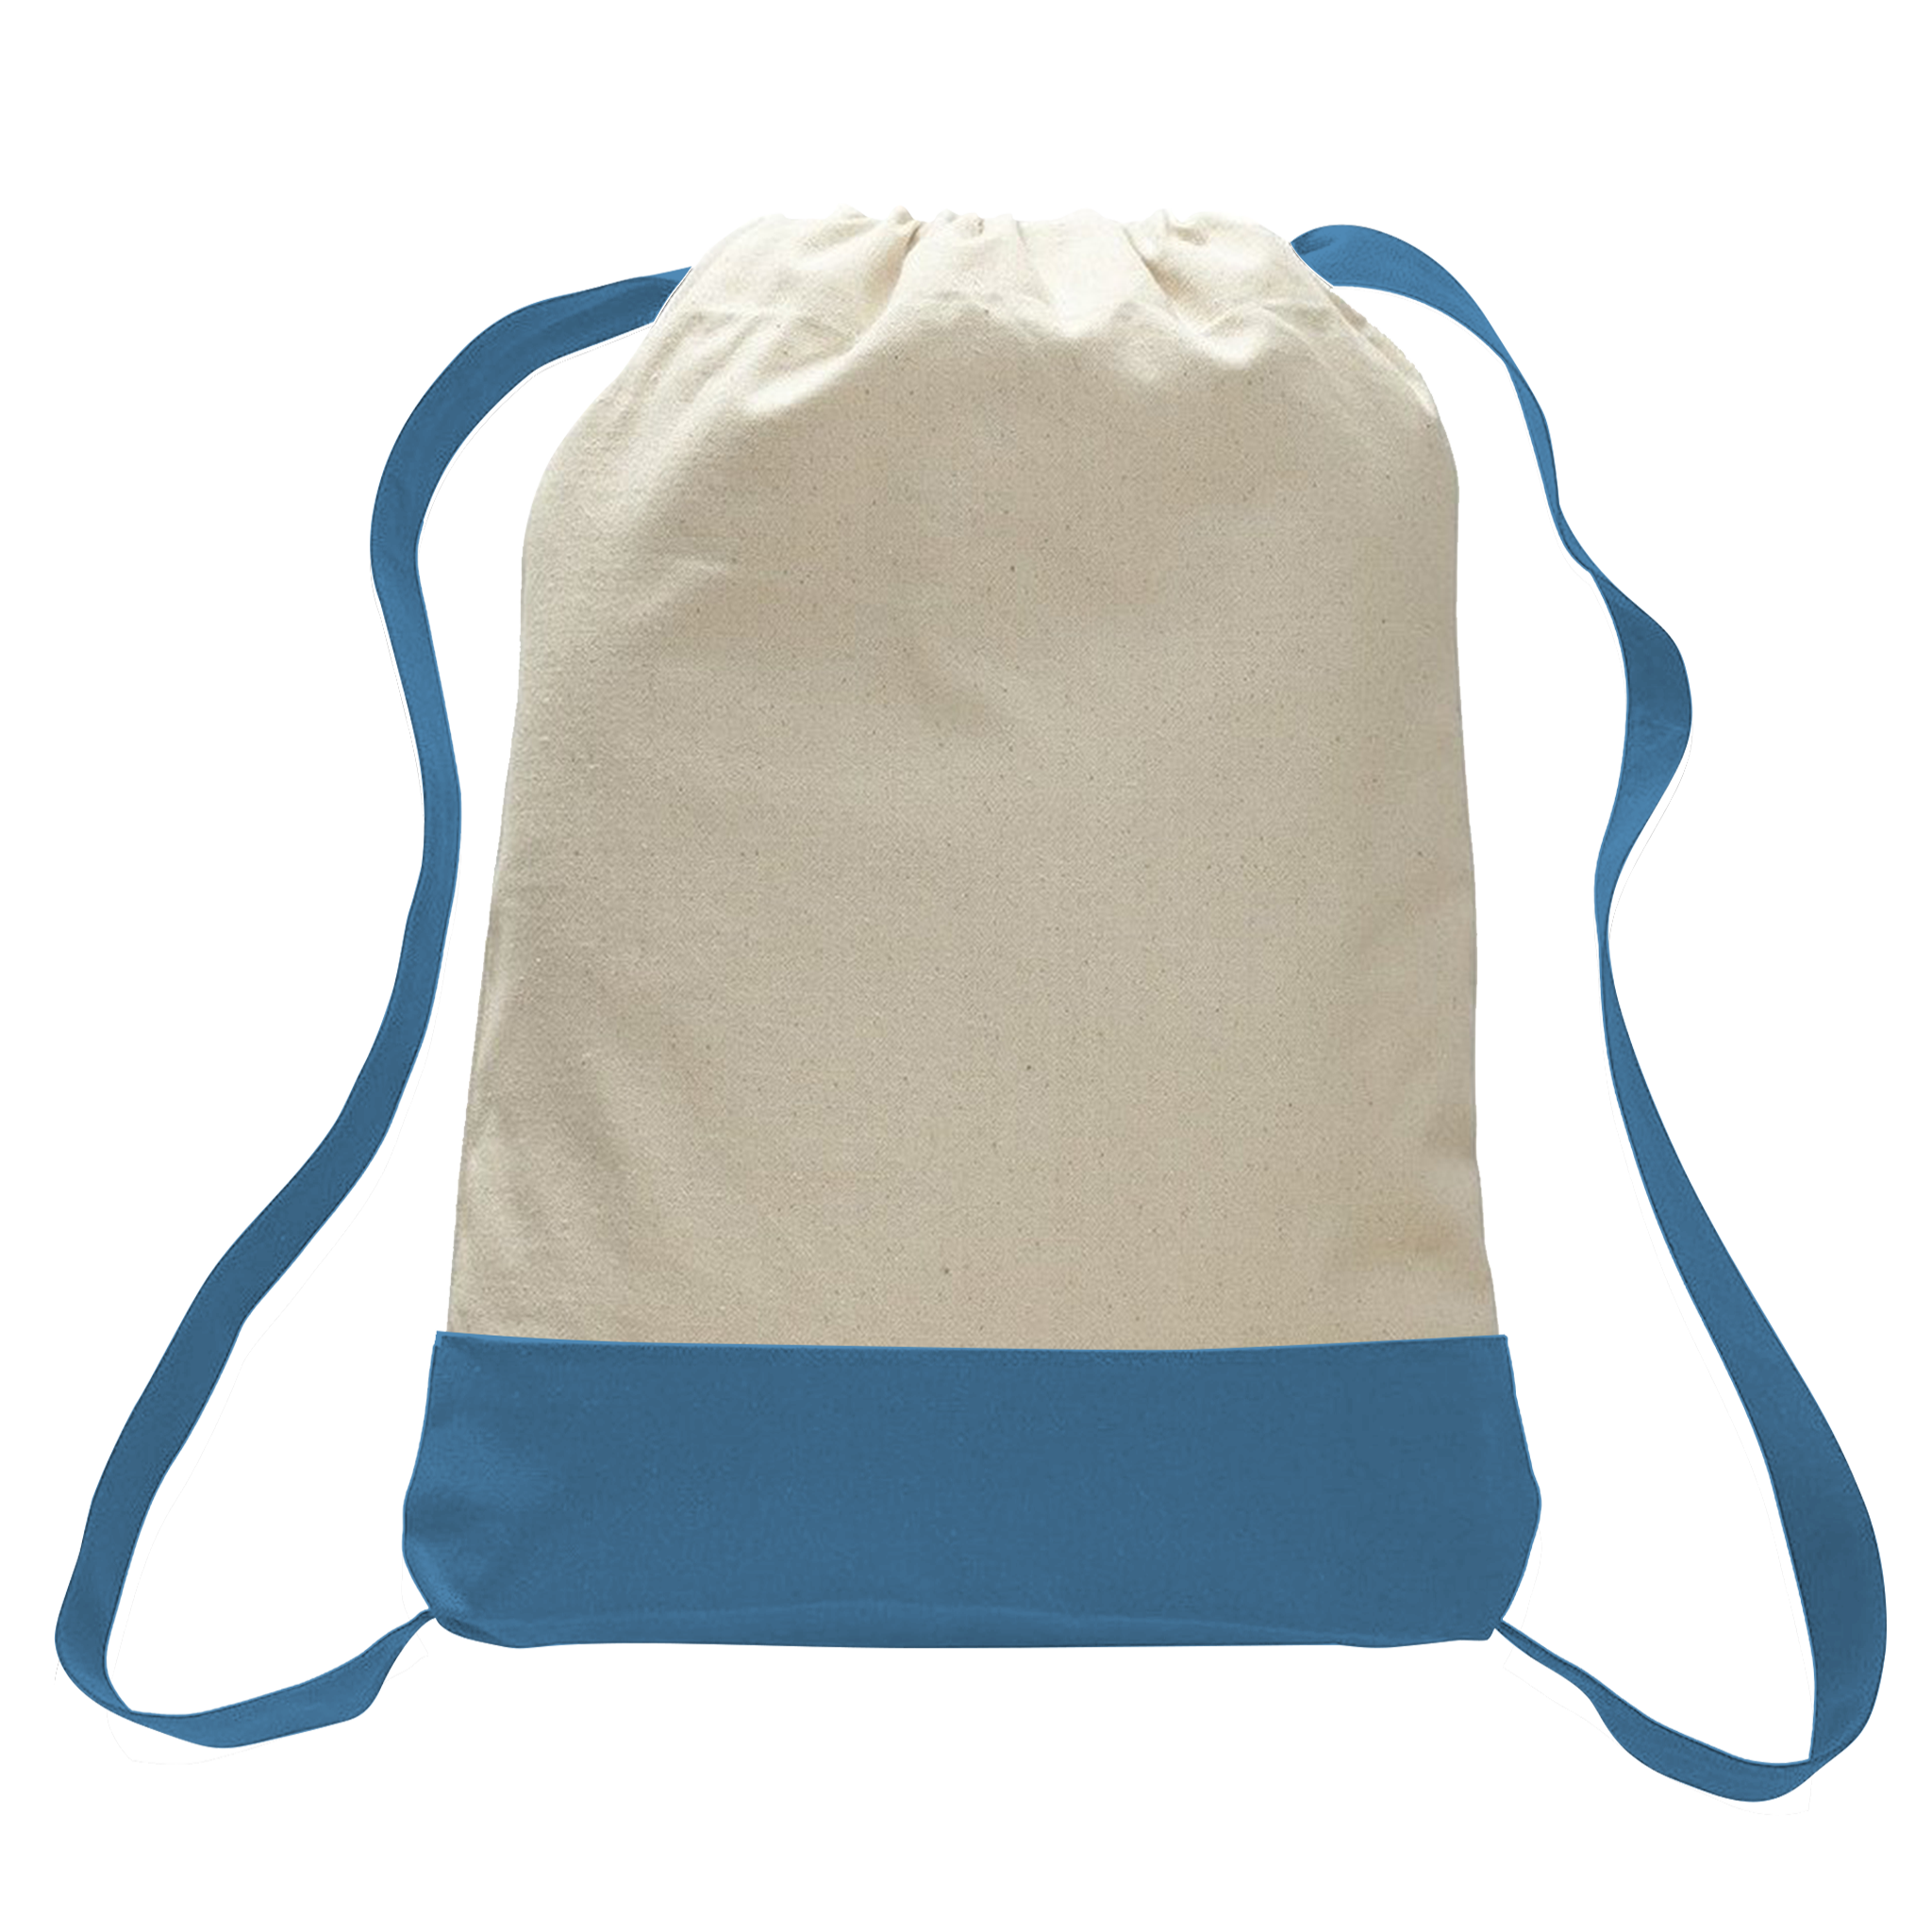 Two-tone Canvas Drawstring Bag (BK02)